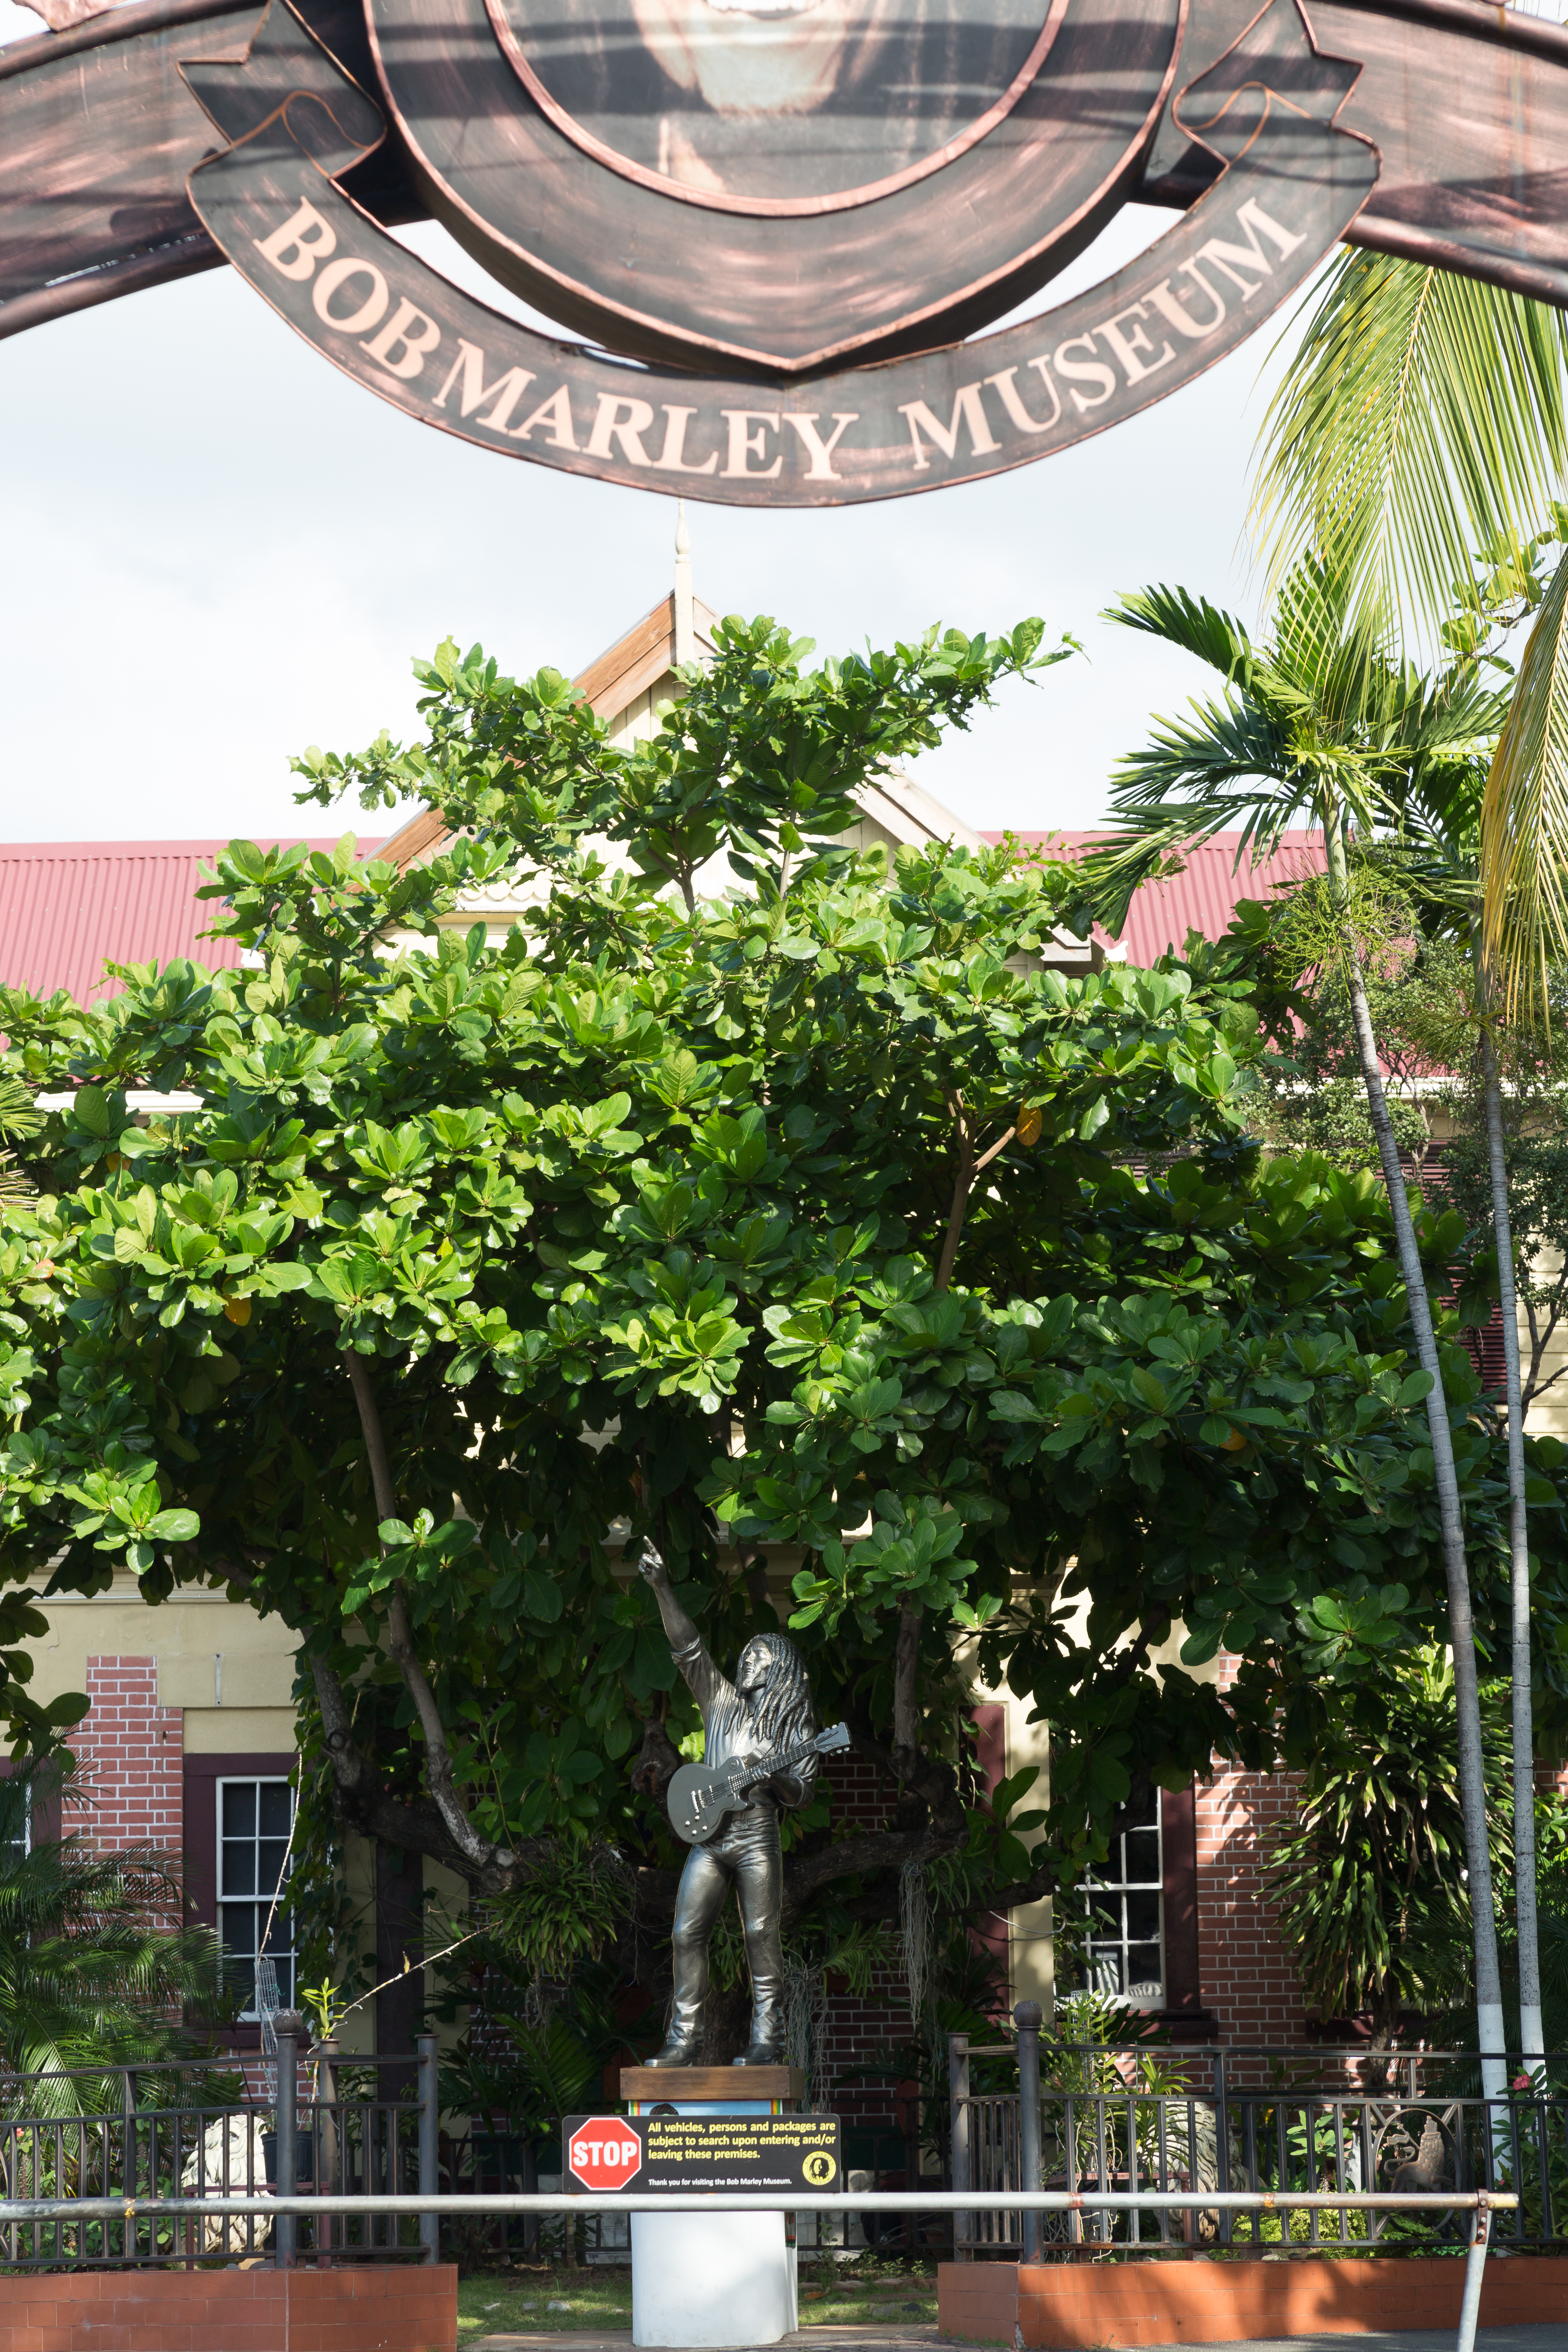 Bob Marley Museum statue